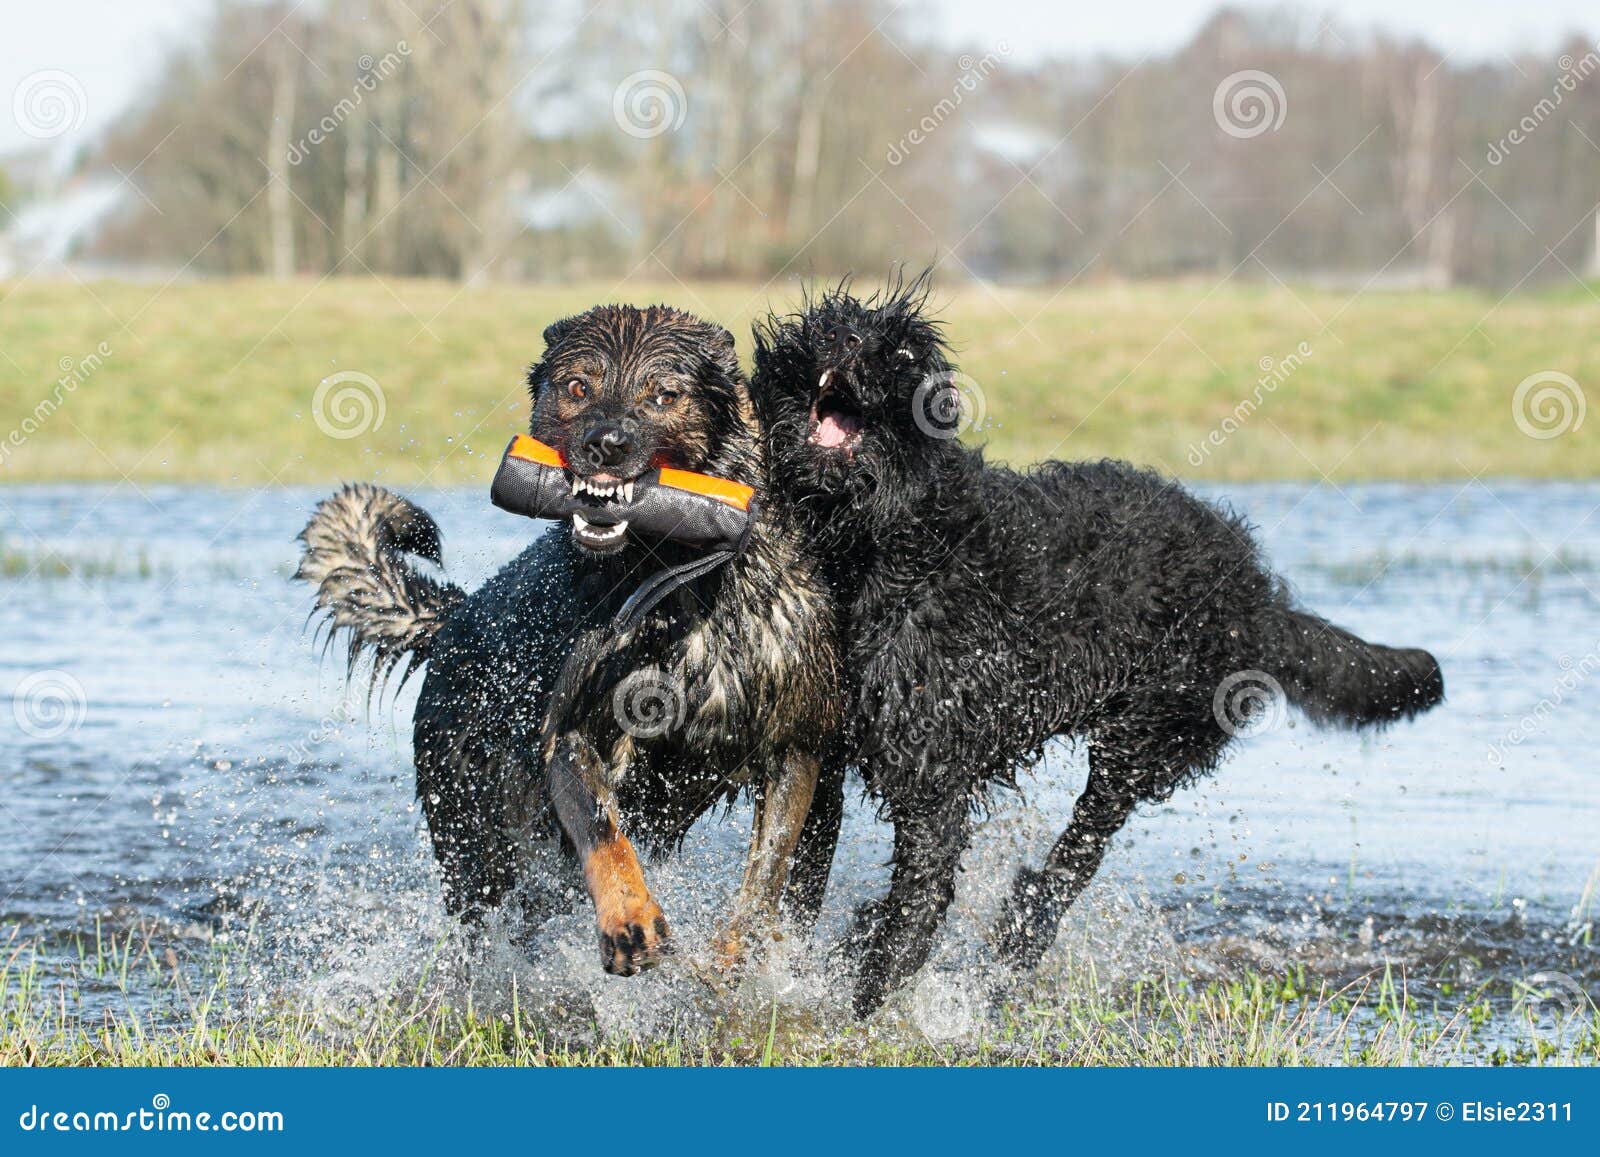 are german shepherds good water dogs